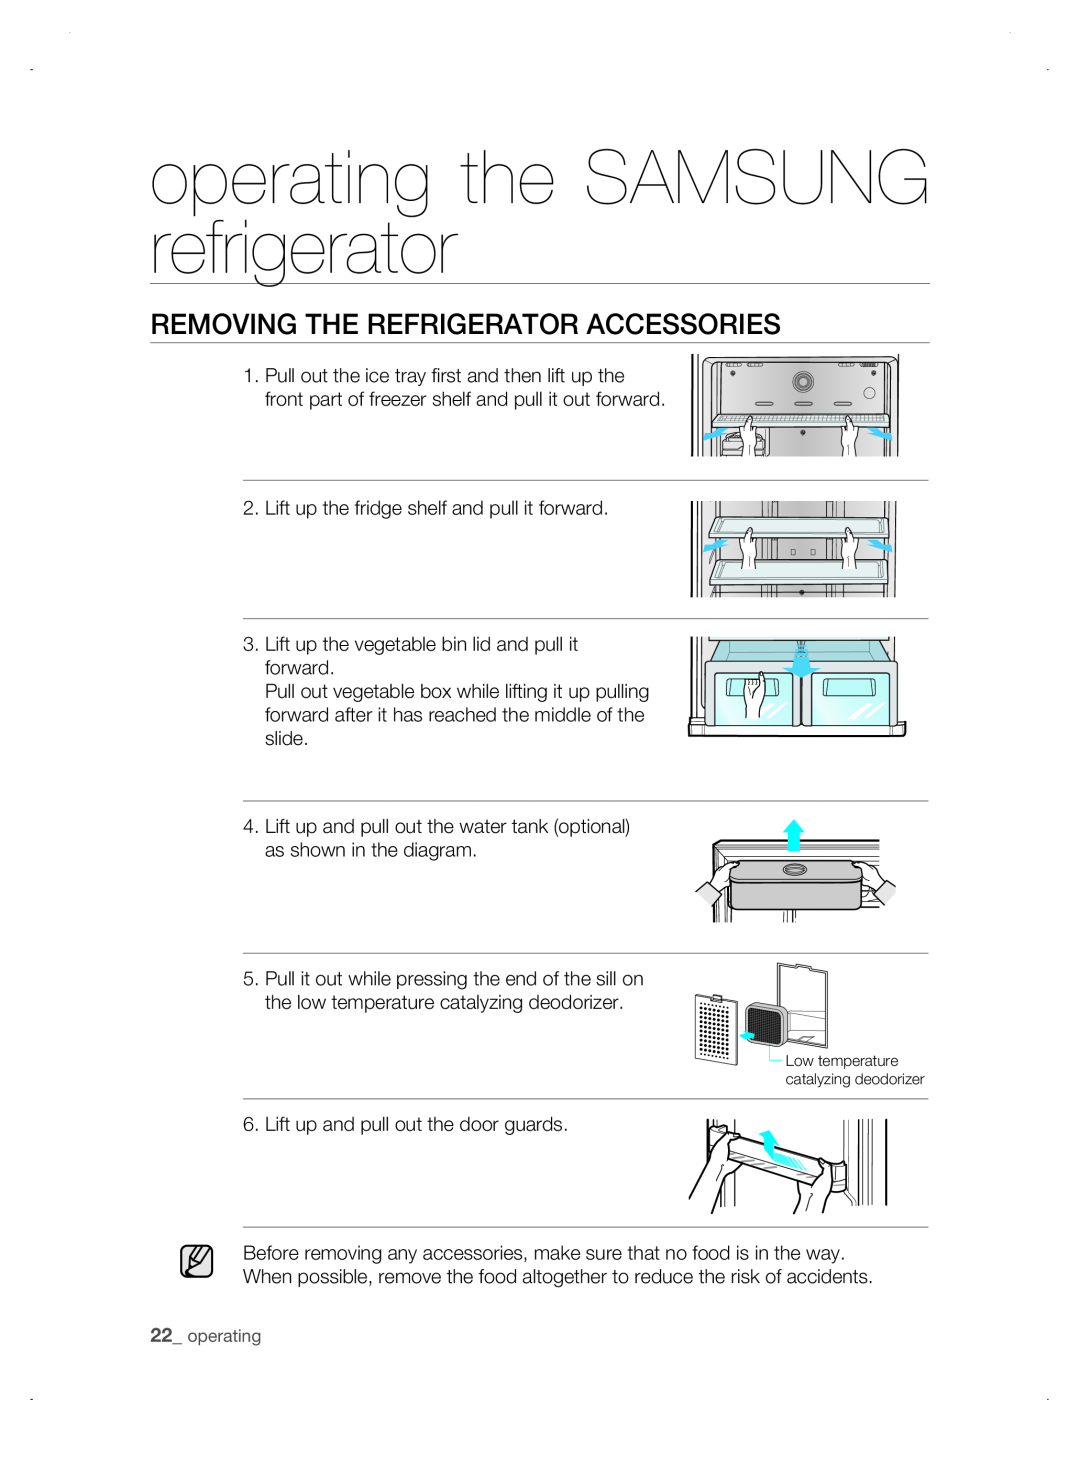 Samsung DA99-01906A user manual Removing The Refrigerator Accessories, operating the SAMSUNG refrigerator 